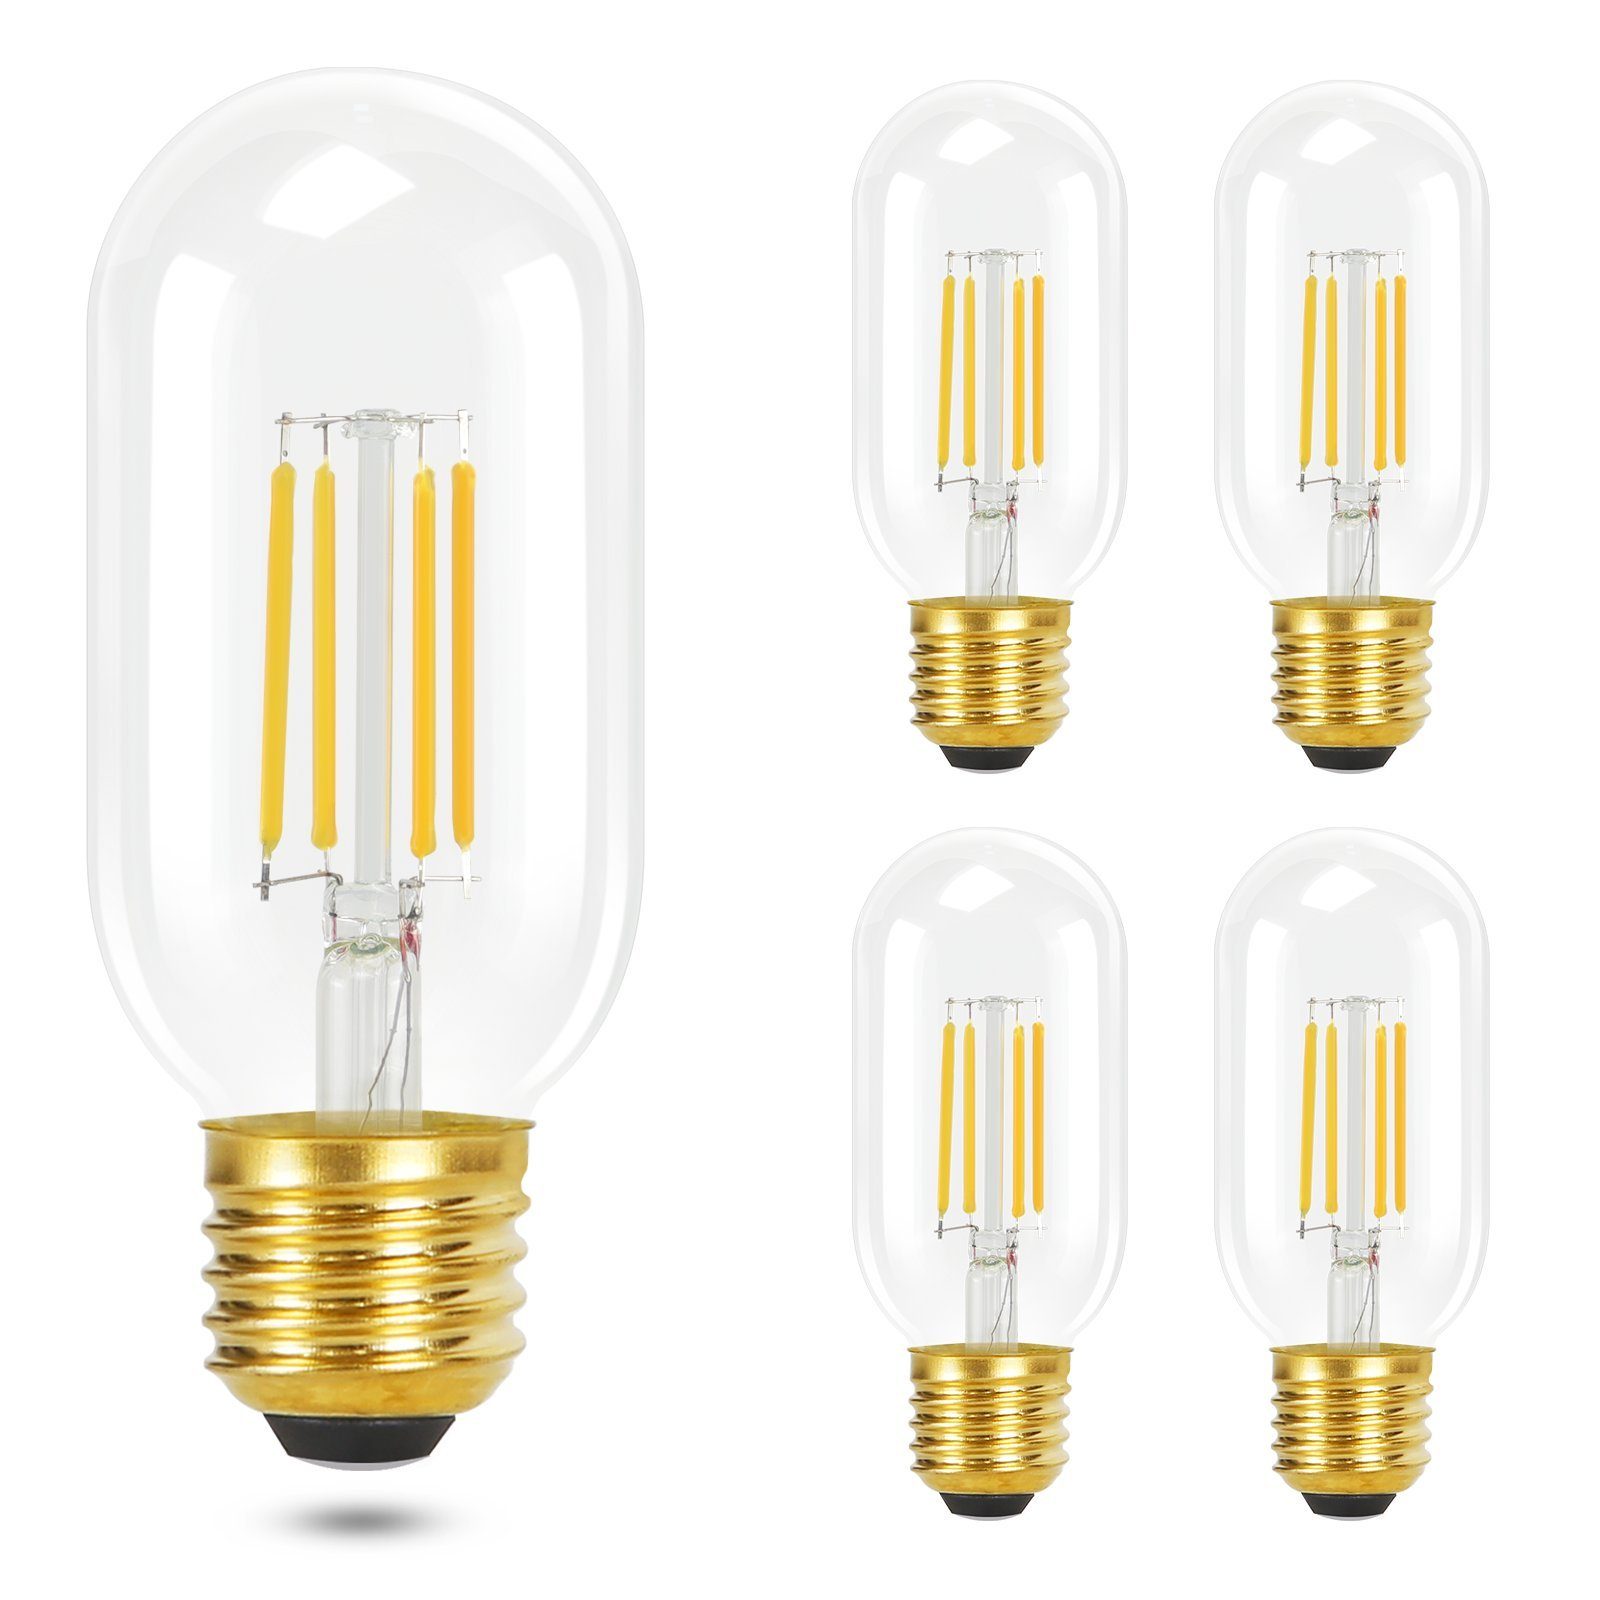 Nettlife LED-Leuchtmittel LED Warmweiss Vintage Glühbirnen T45 Lampe E27 Birnen Edison 4W 2700K, E27, 4 St., Warmweiss Transparente